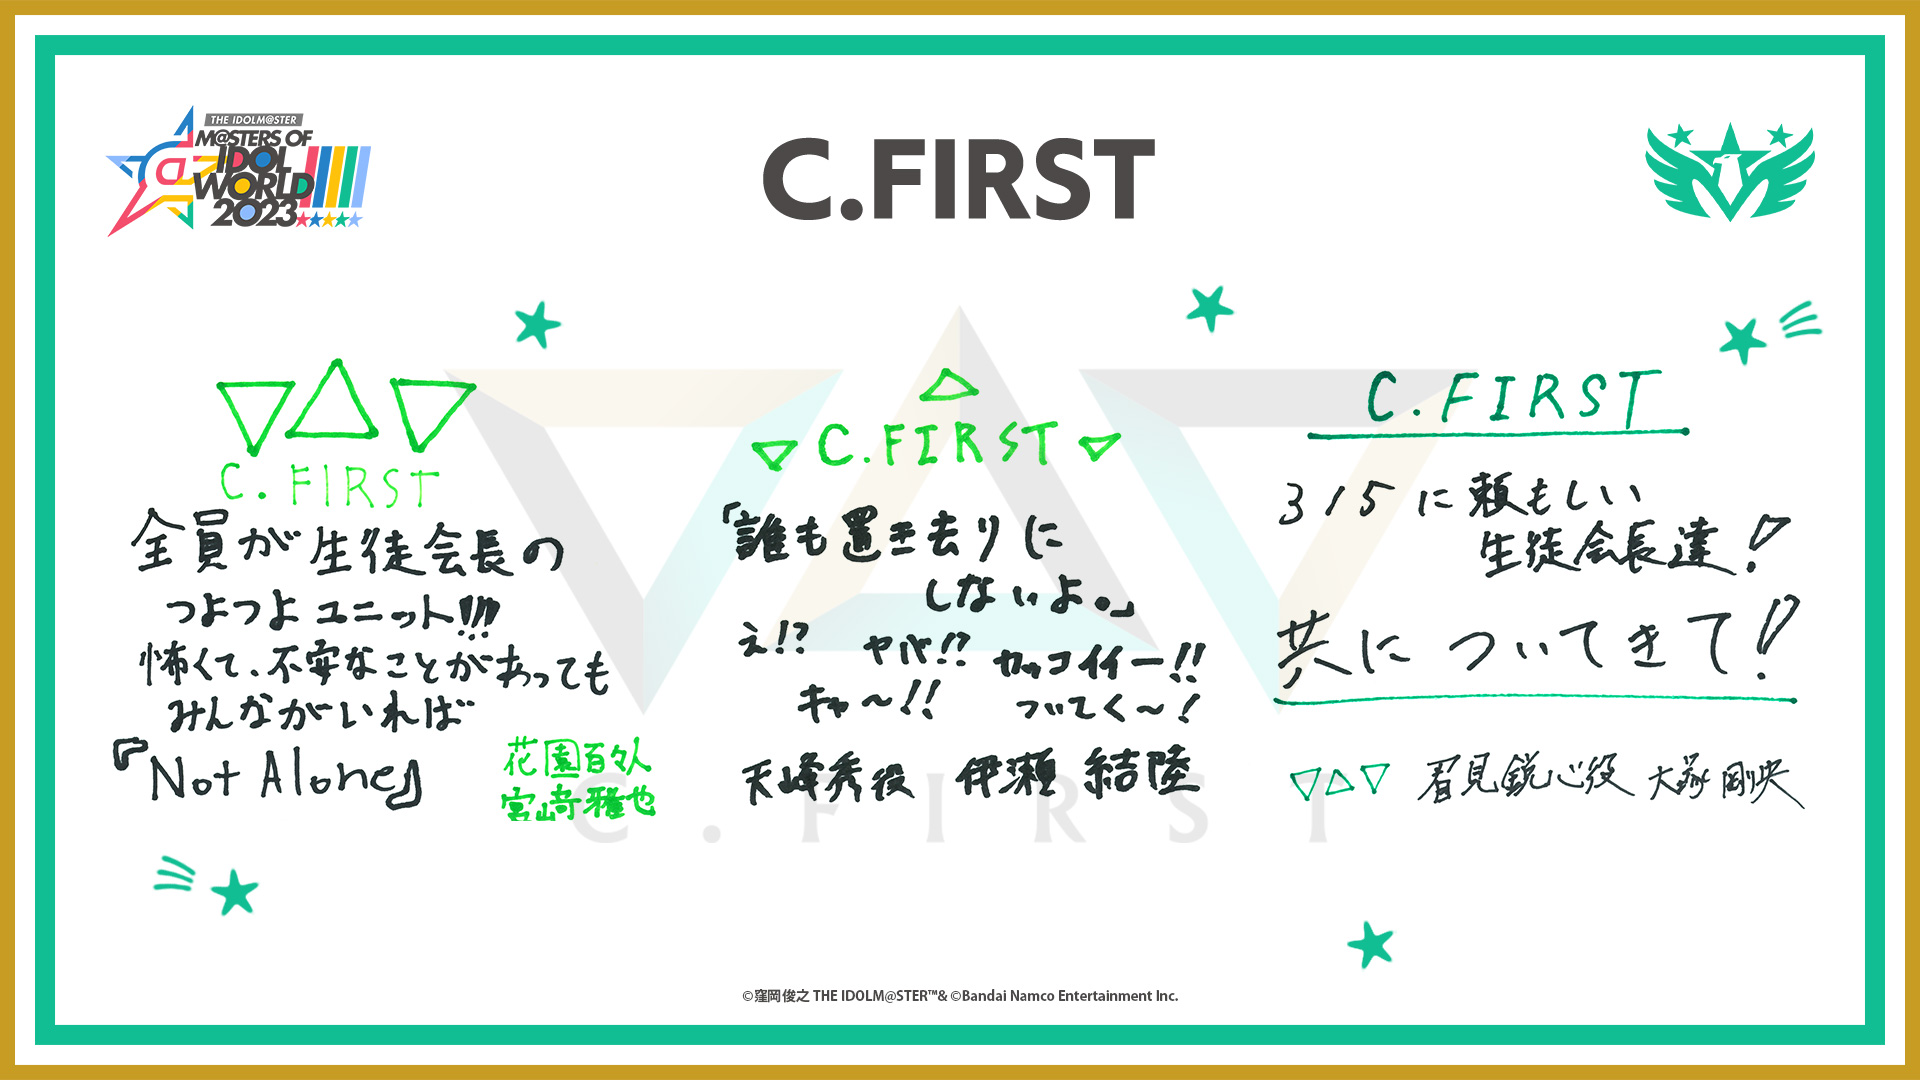 C.FIRST